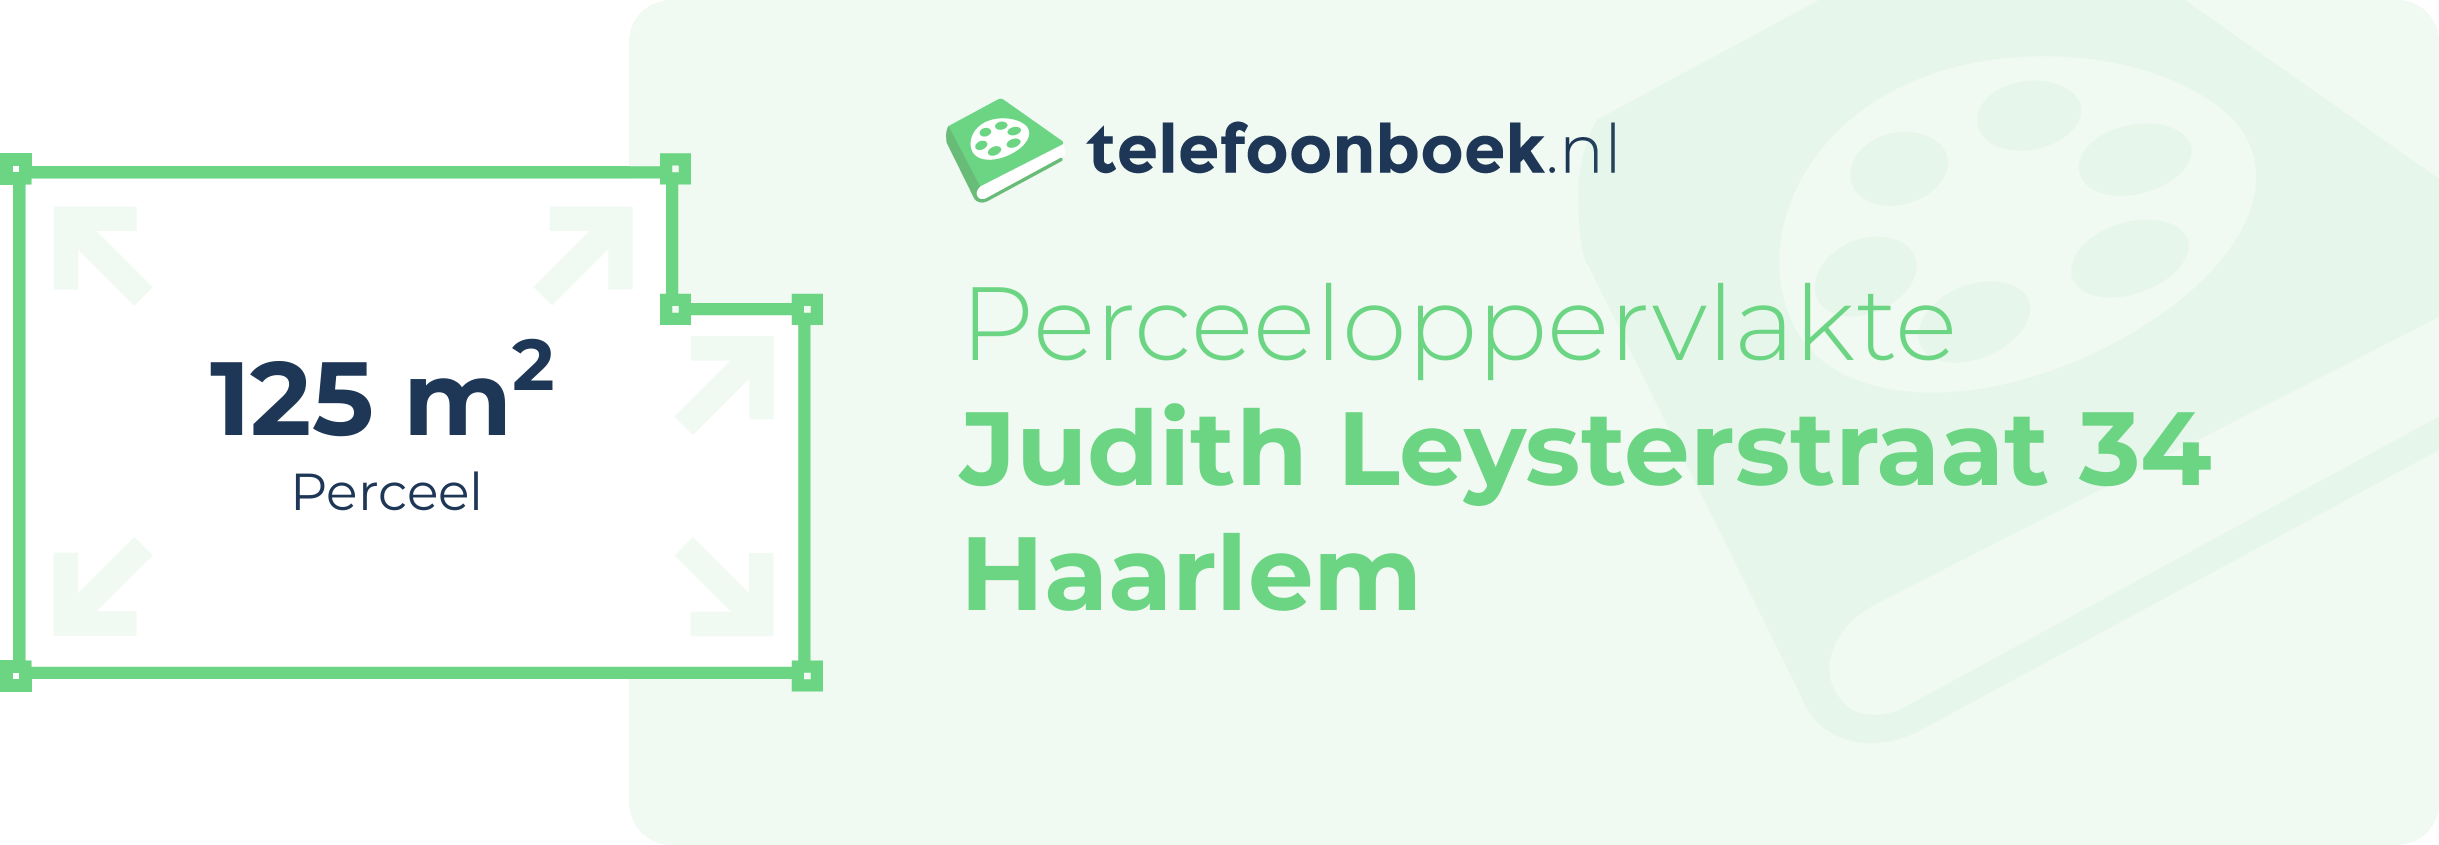 Perceeloppervlakte Judith Leysterstraat 34 Haarlem